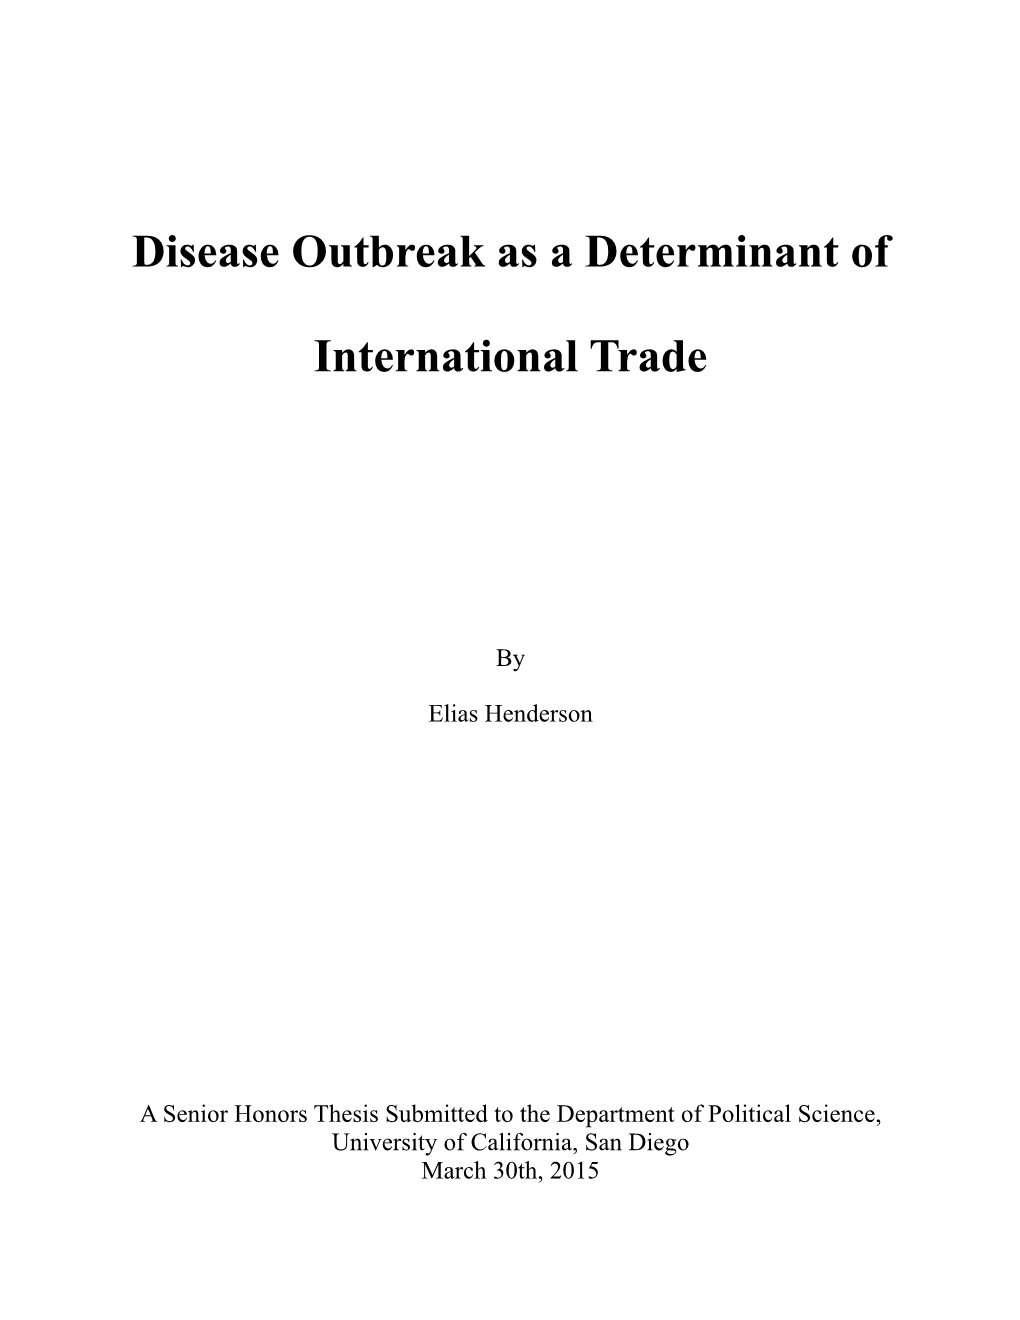 Disease Outbreak As a Determinant of International Trade